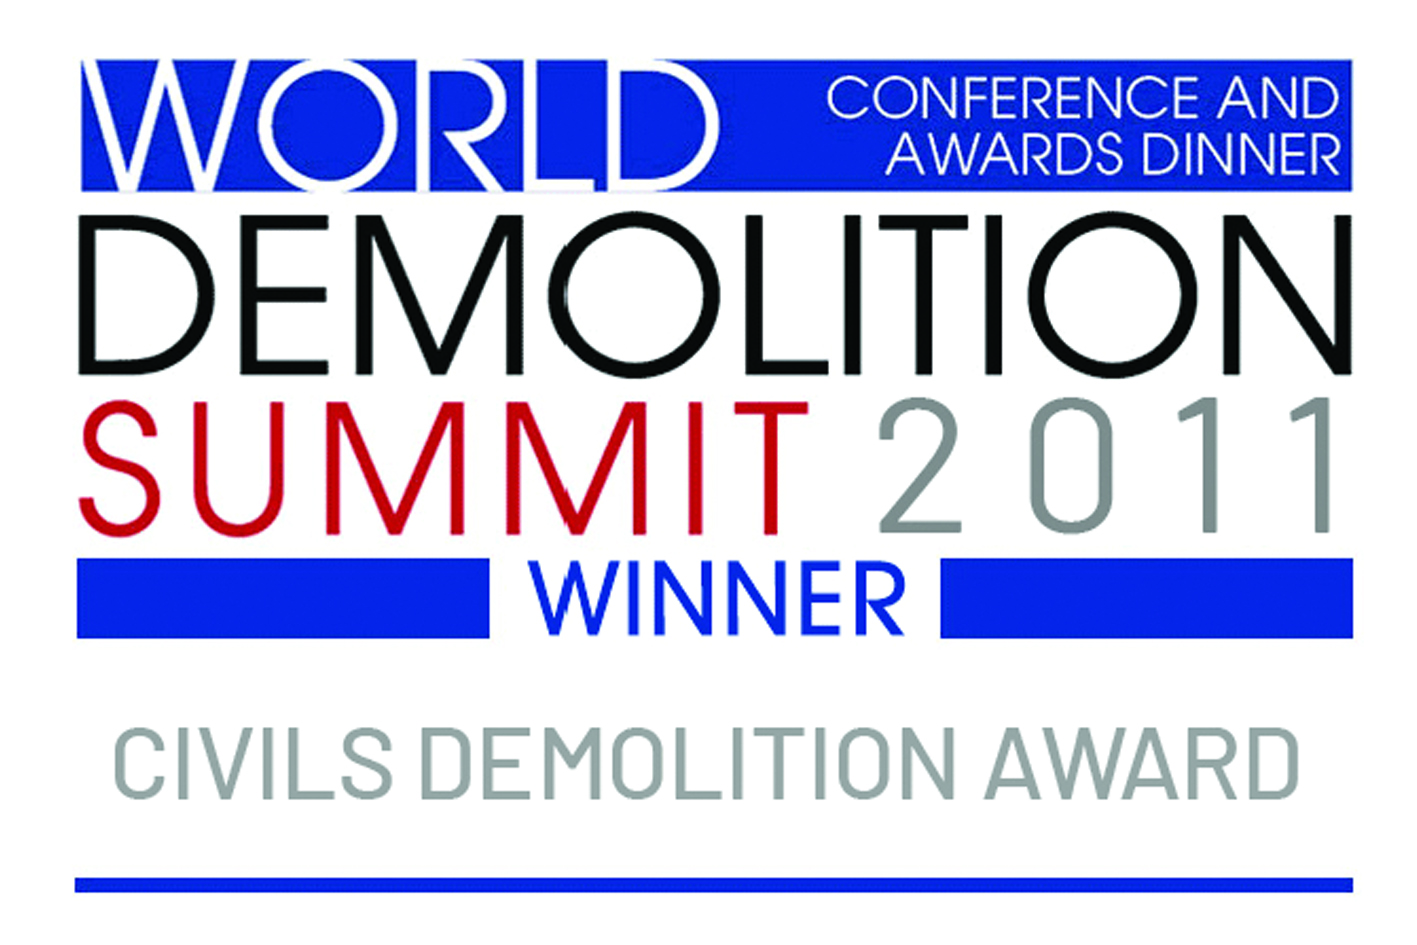 logo - world demolition summit 2011 winner for civils demolition award.